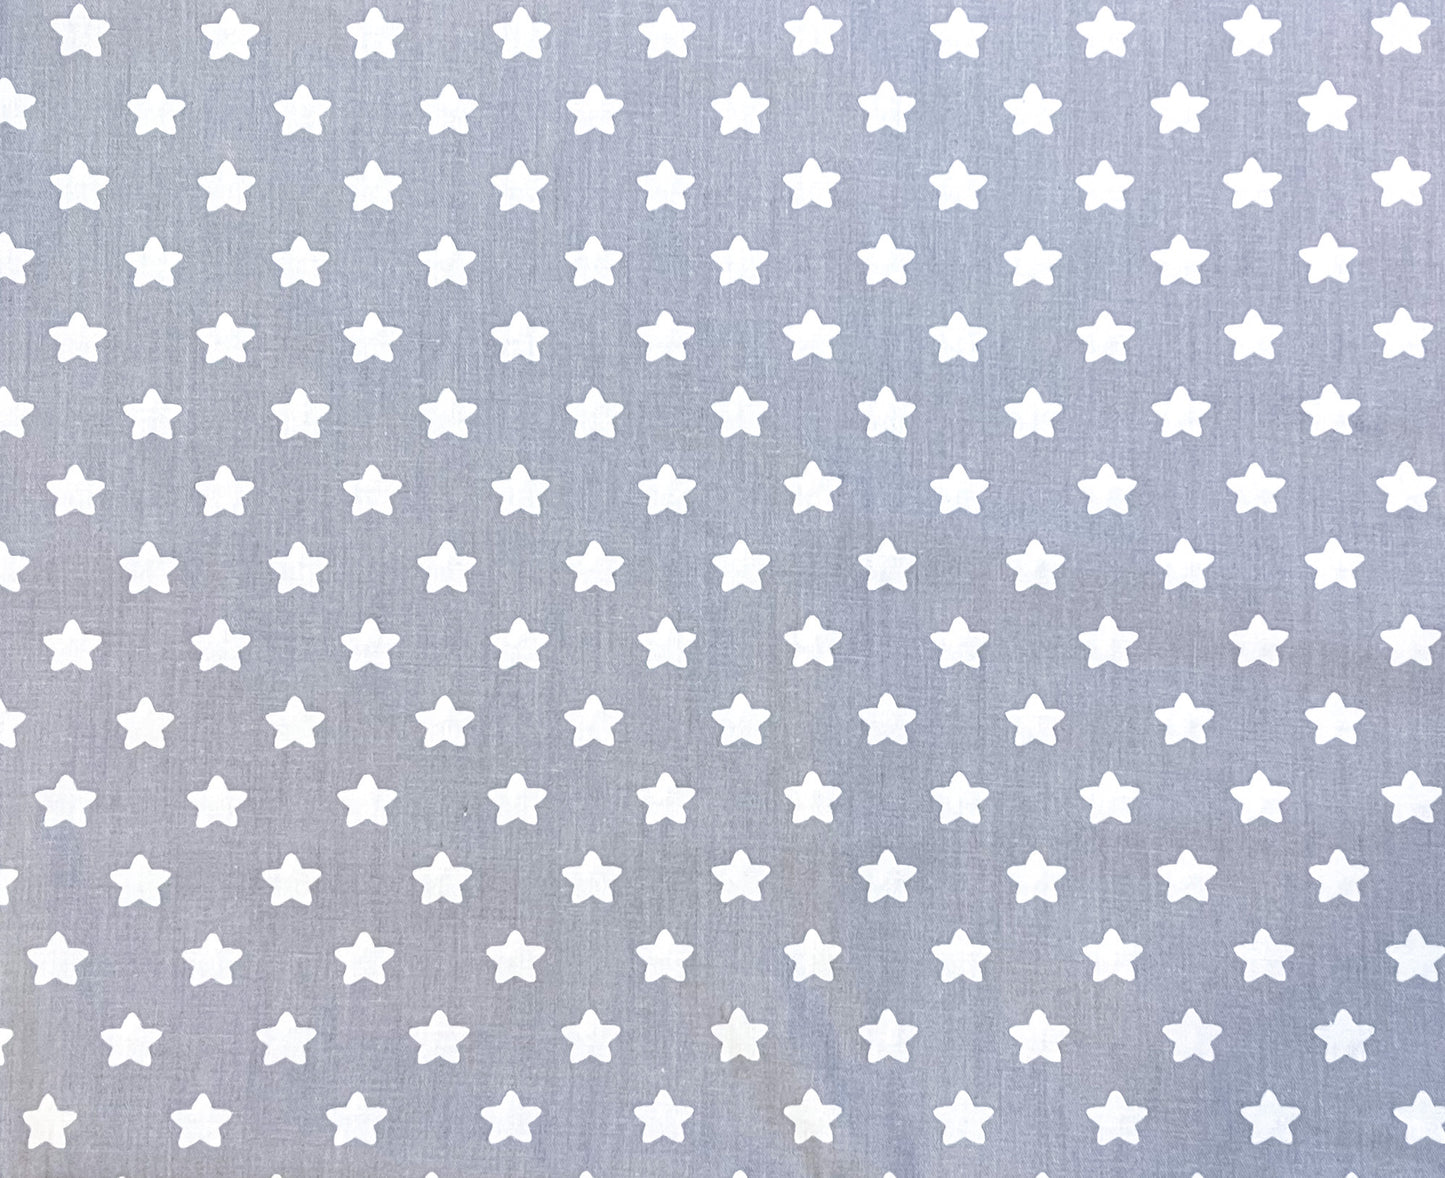 White stars on grey